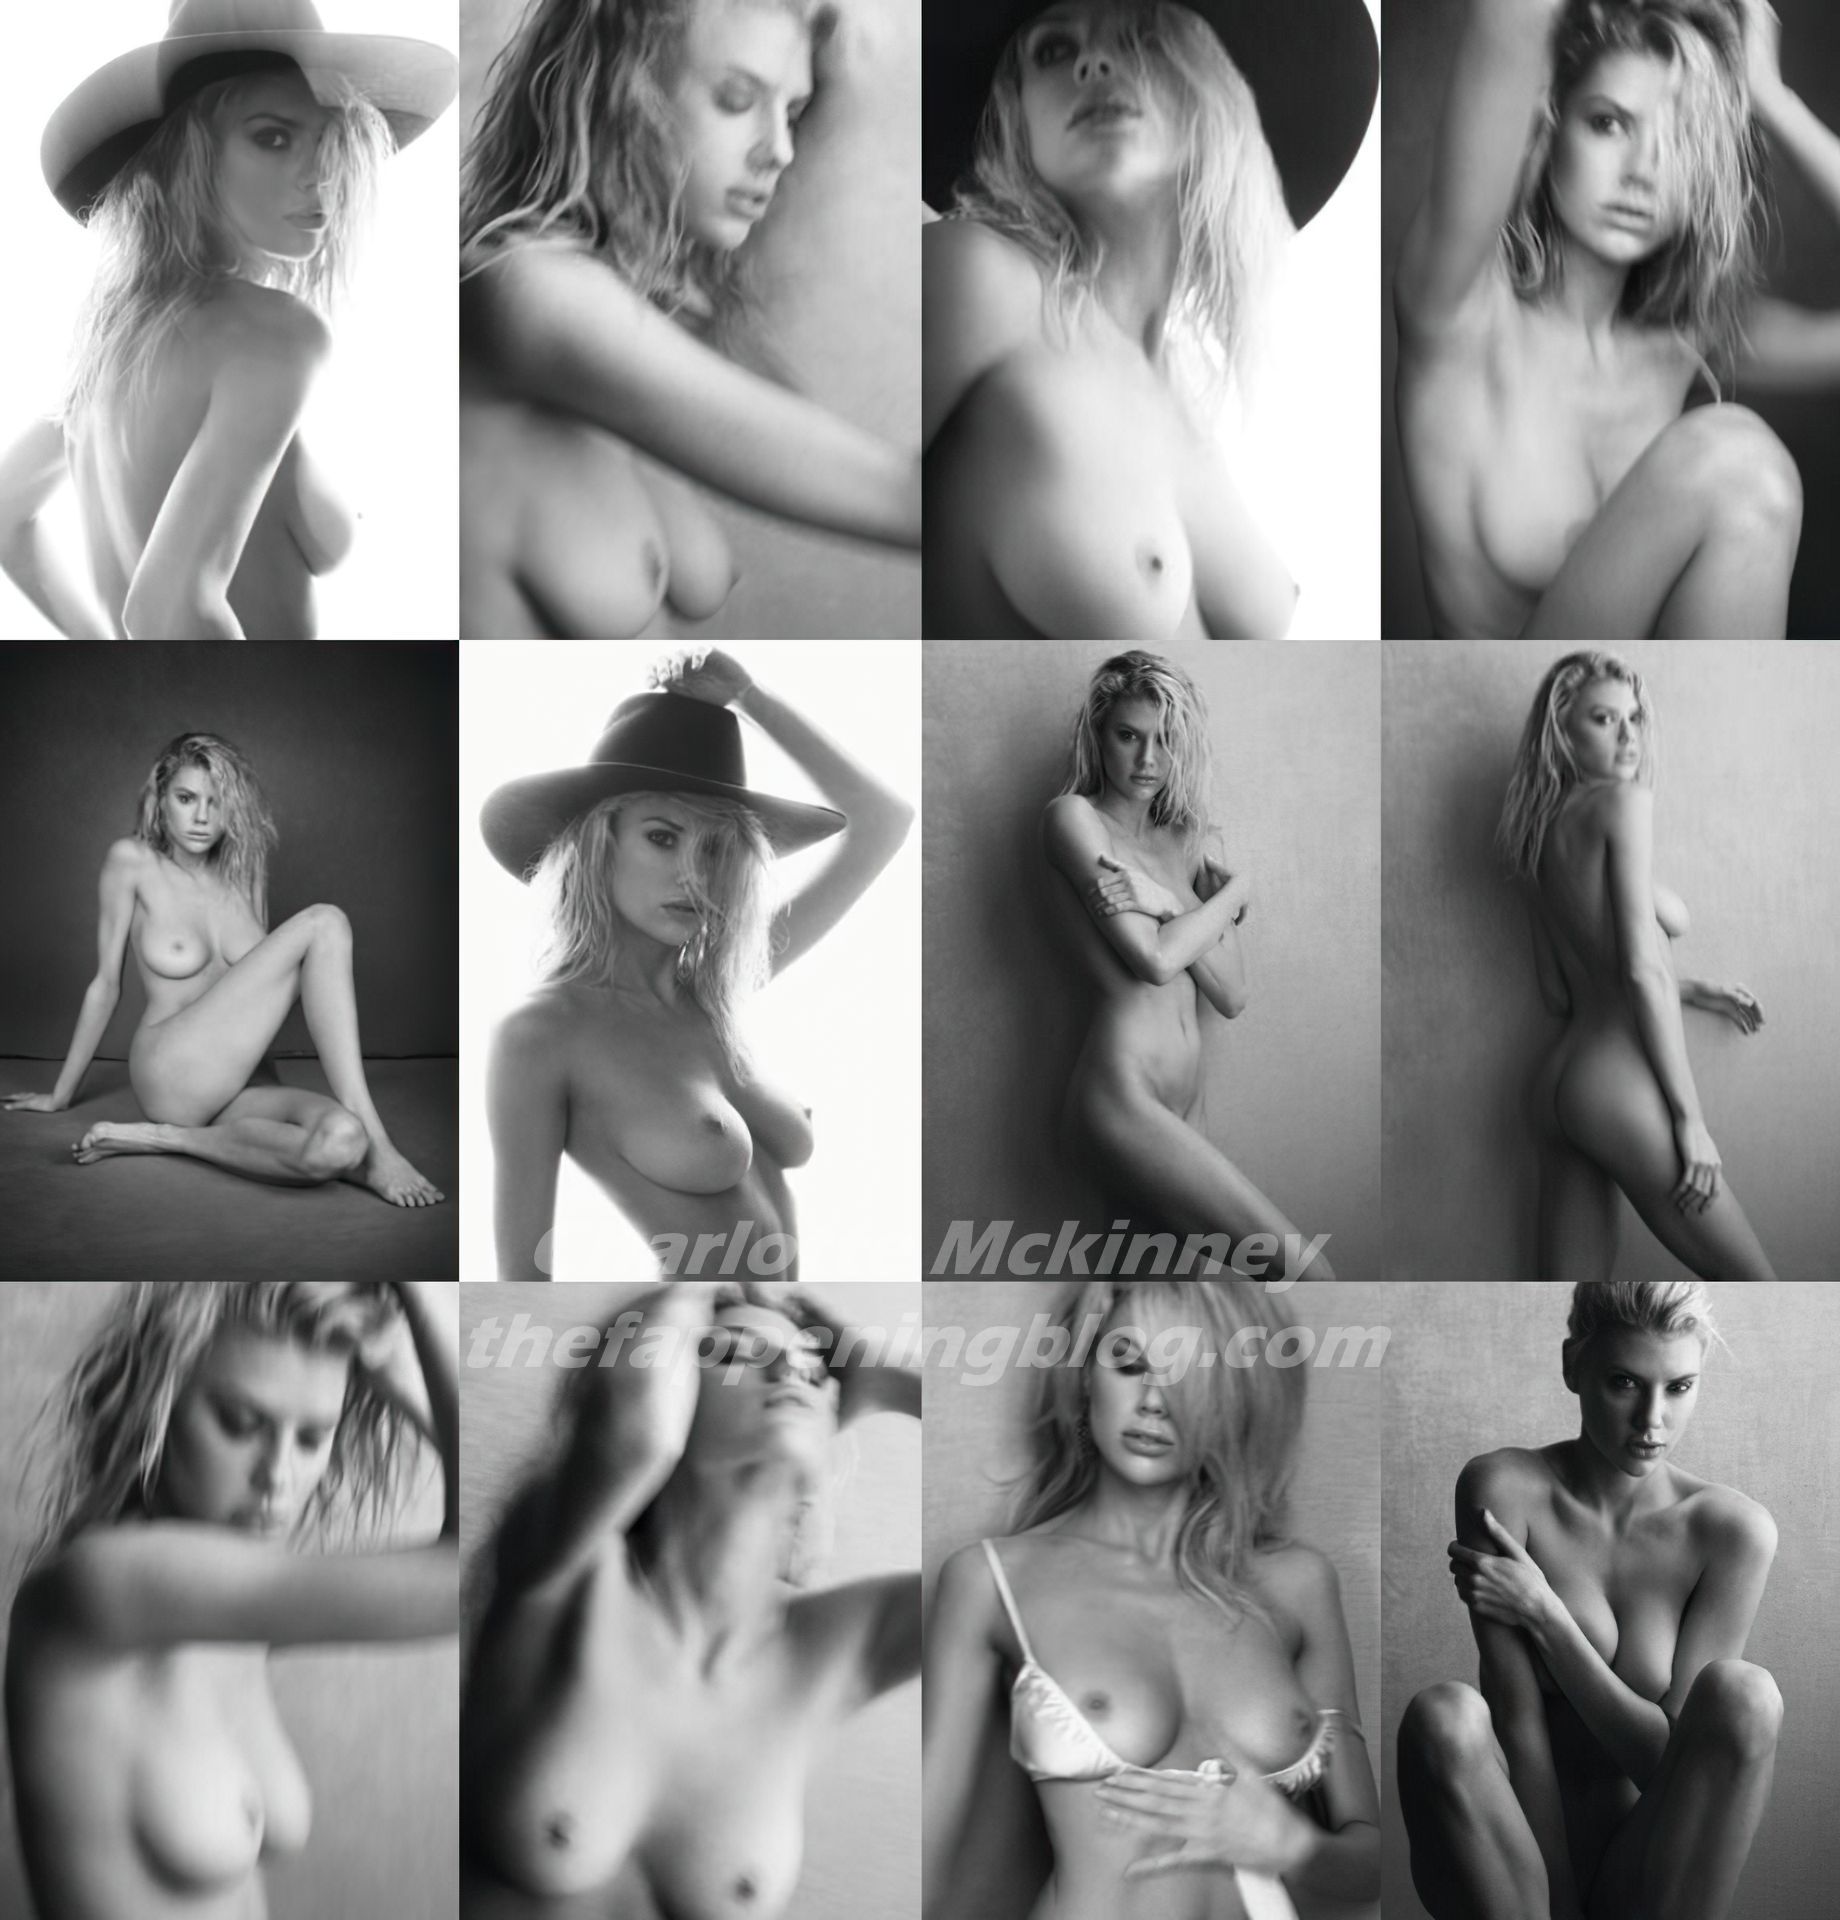 Nude charlotte images mckinney Charlotte McKinney